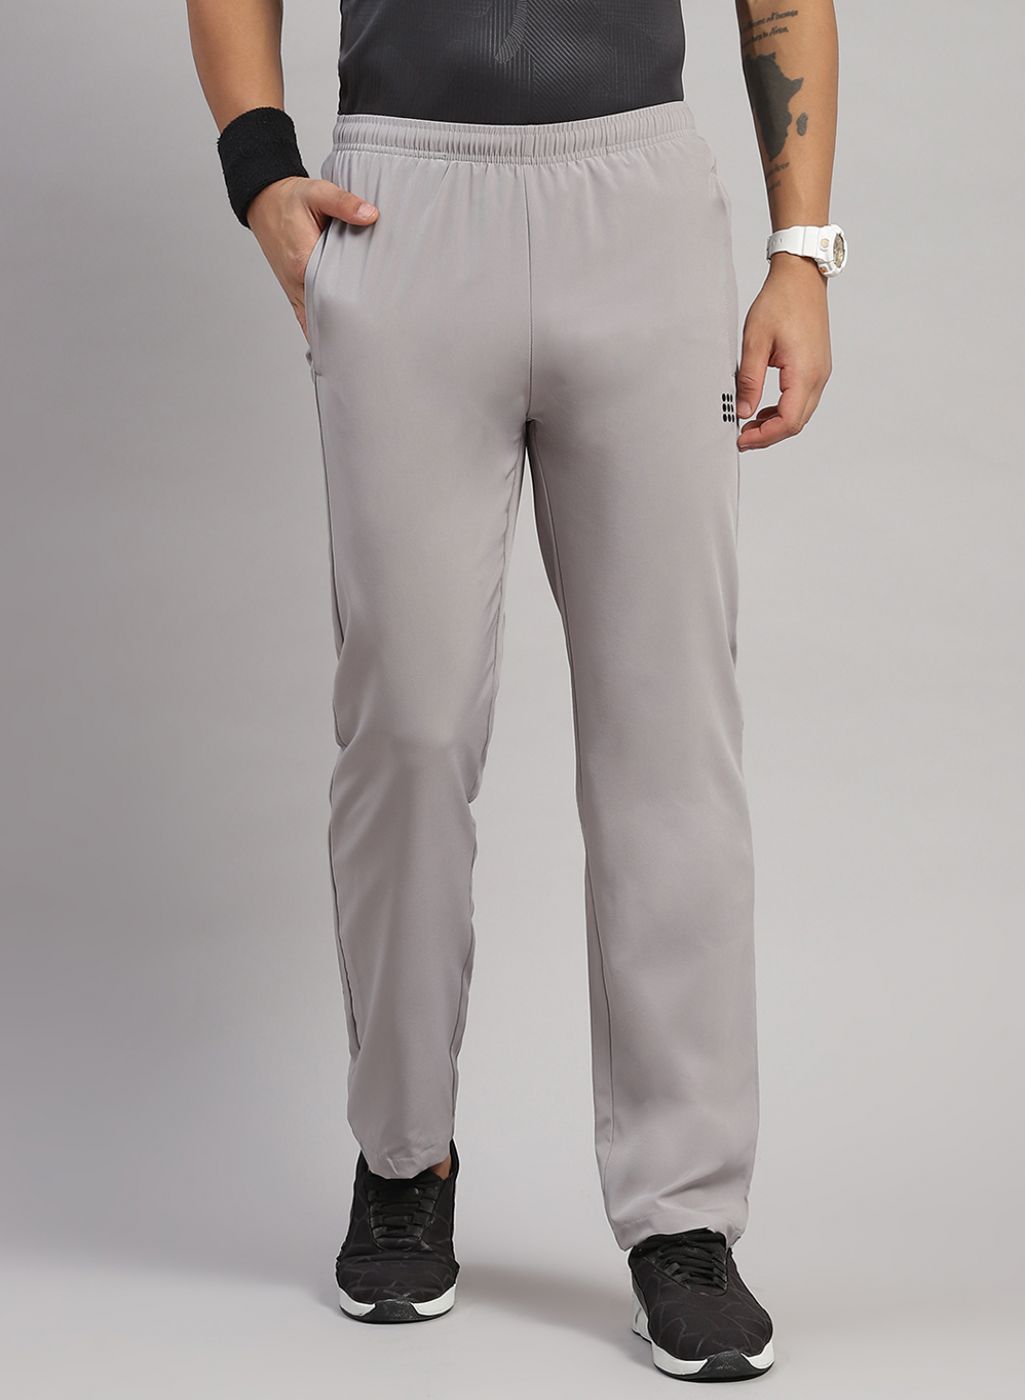 Buy TEAMSPIRIT Solid Men Grey Track Pants Online at Best Prices in India |  Flipkart.com